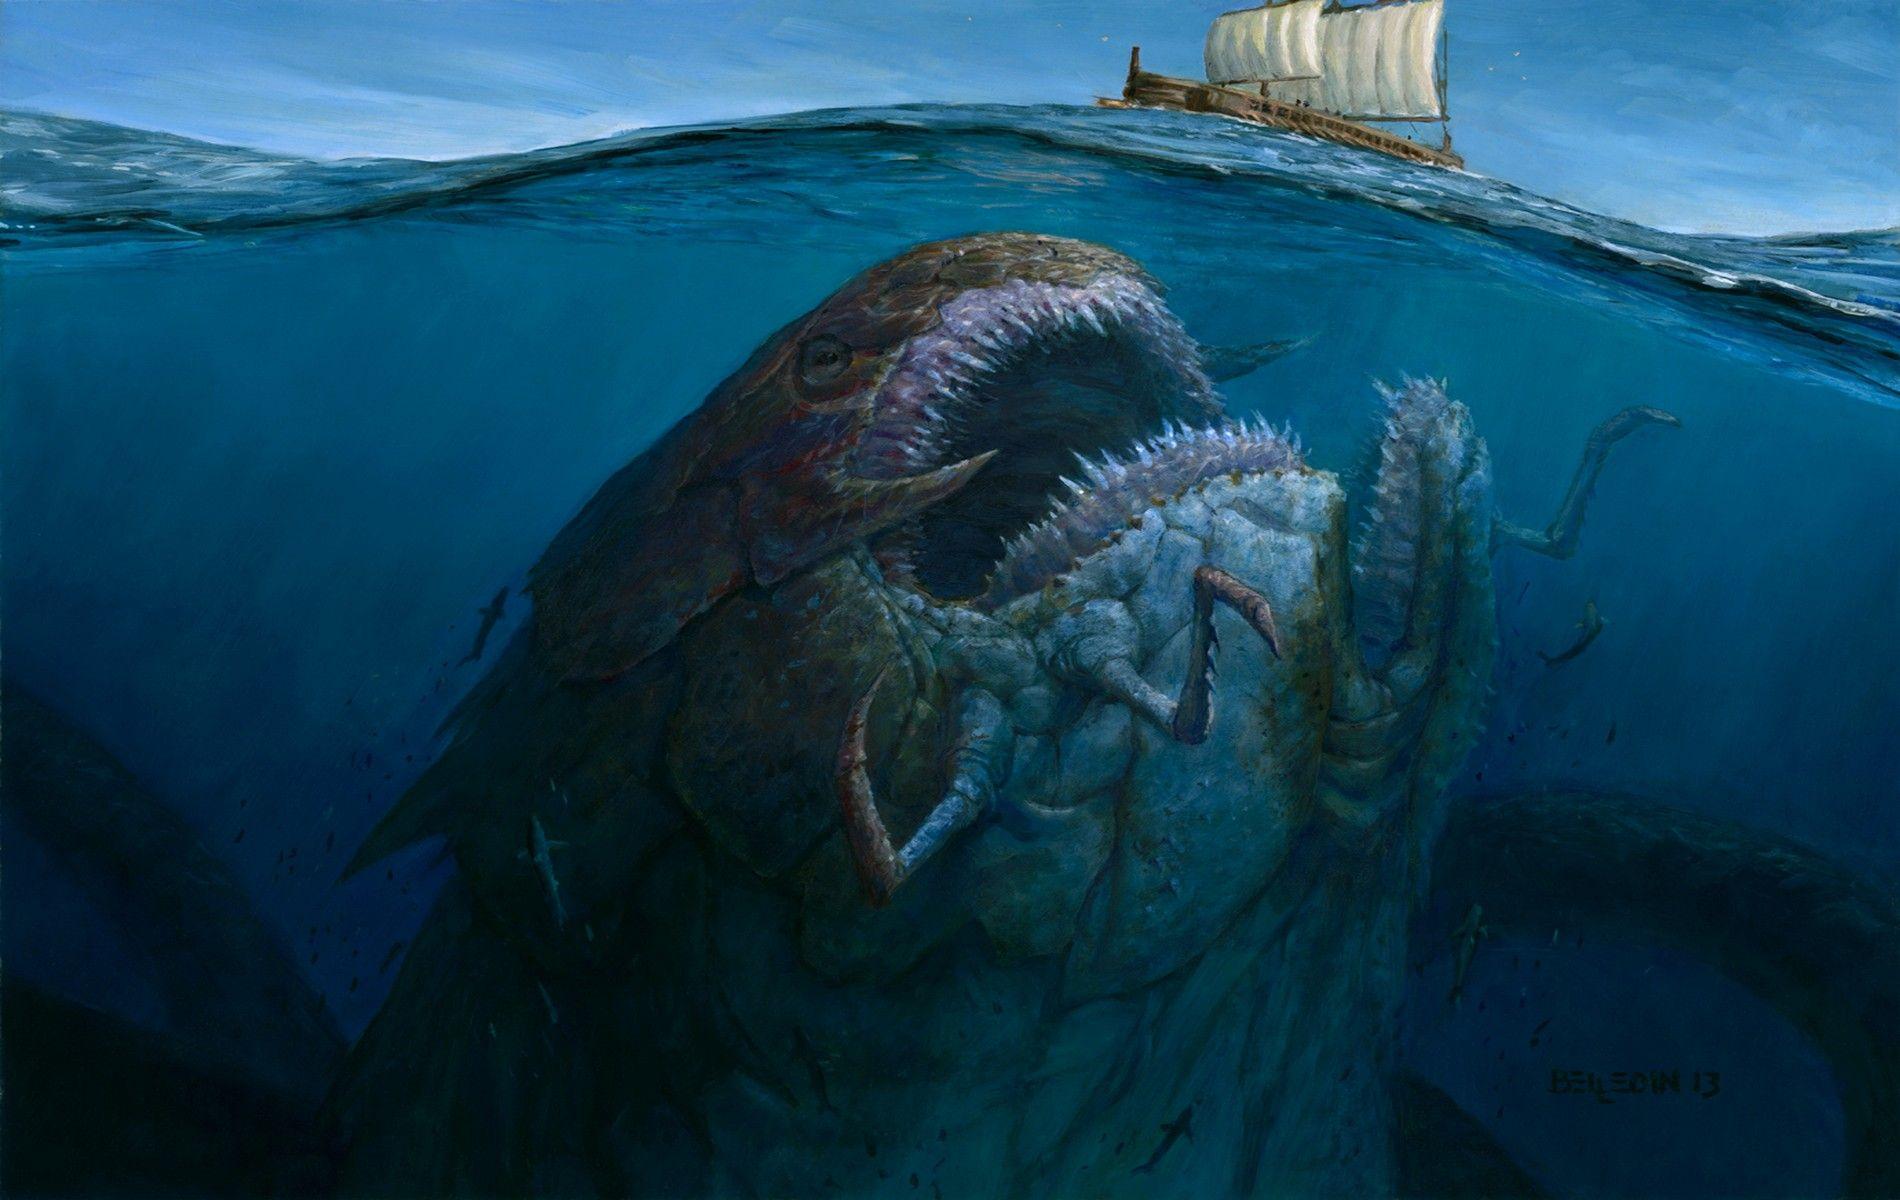 Three head sea monster fantasy 3D illustration digital art landscape  wallpaper Generate Ai 22646300 Stock Photo at Vecteezy